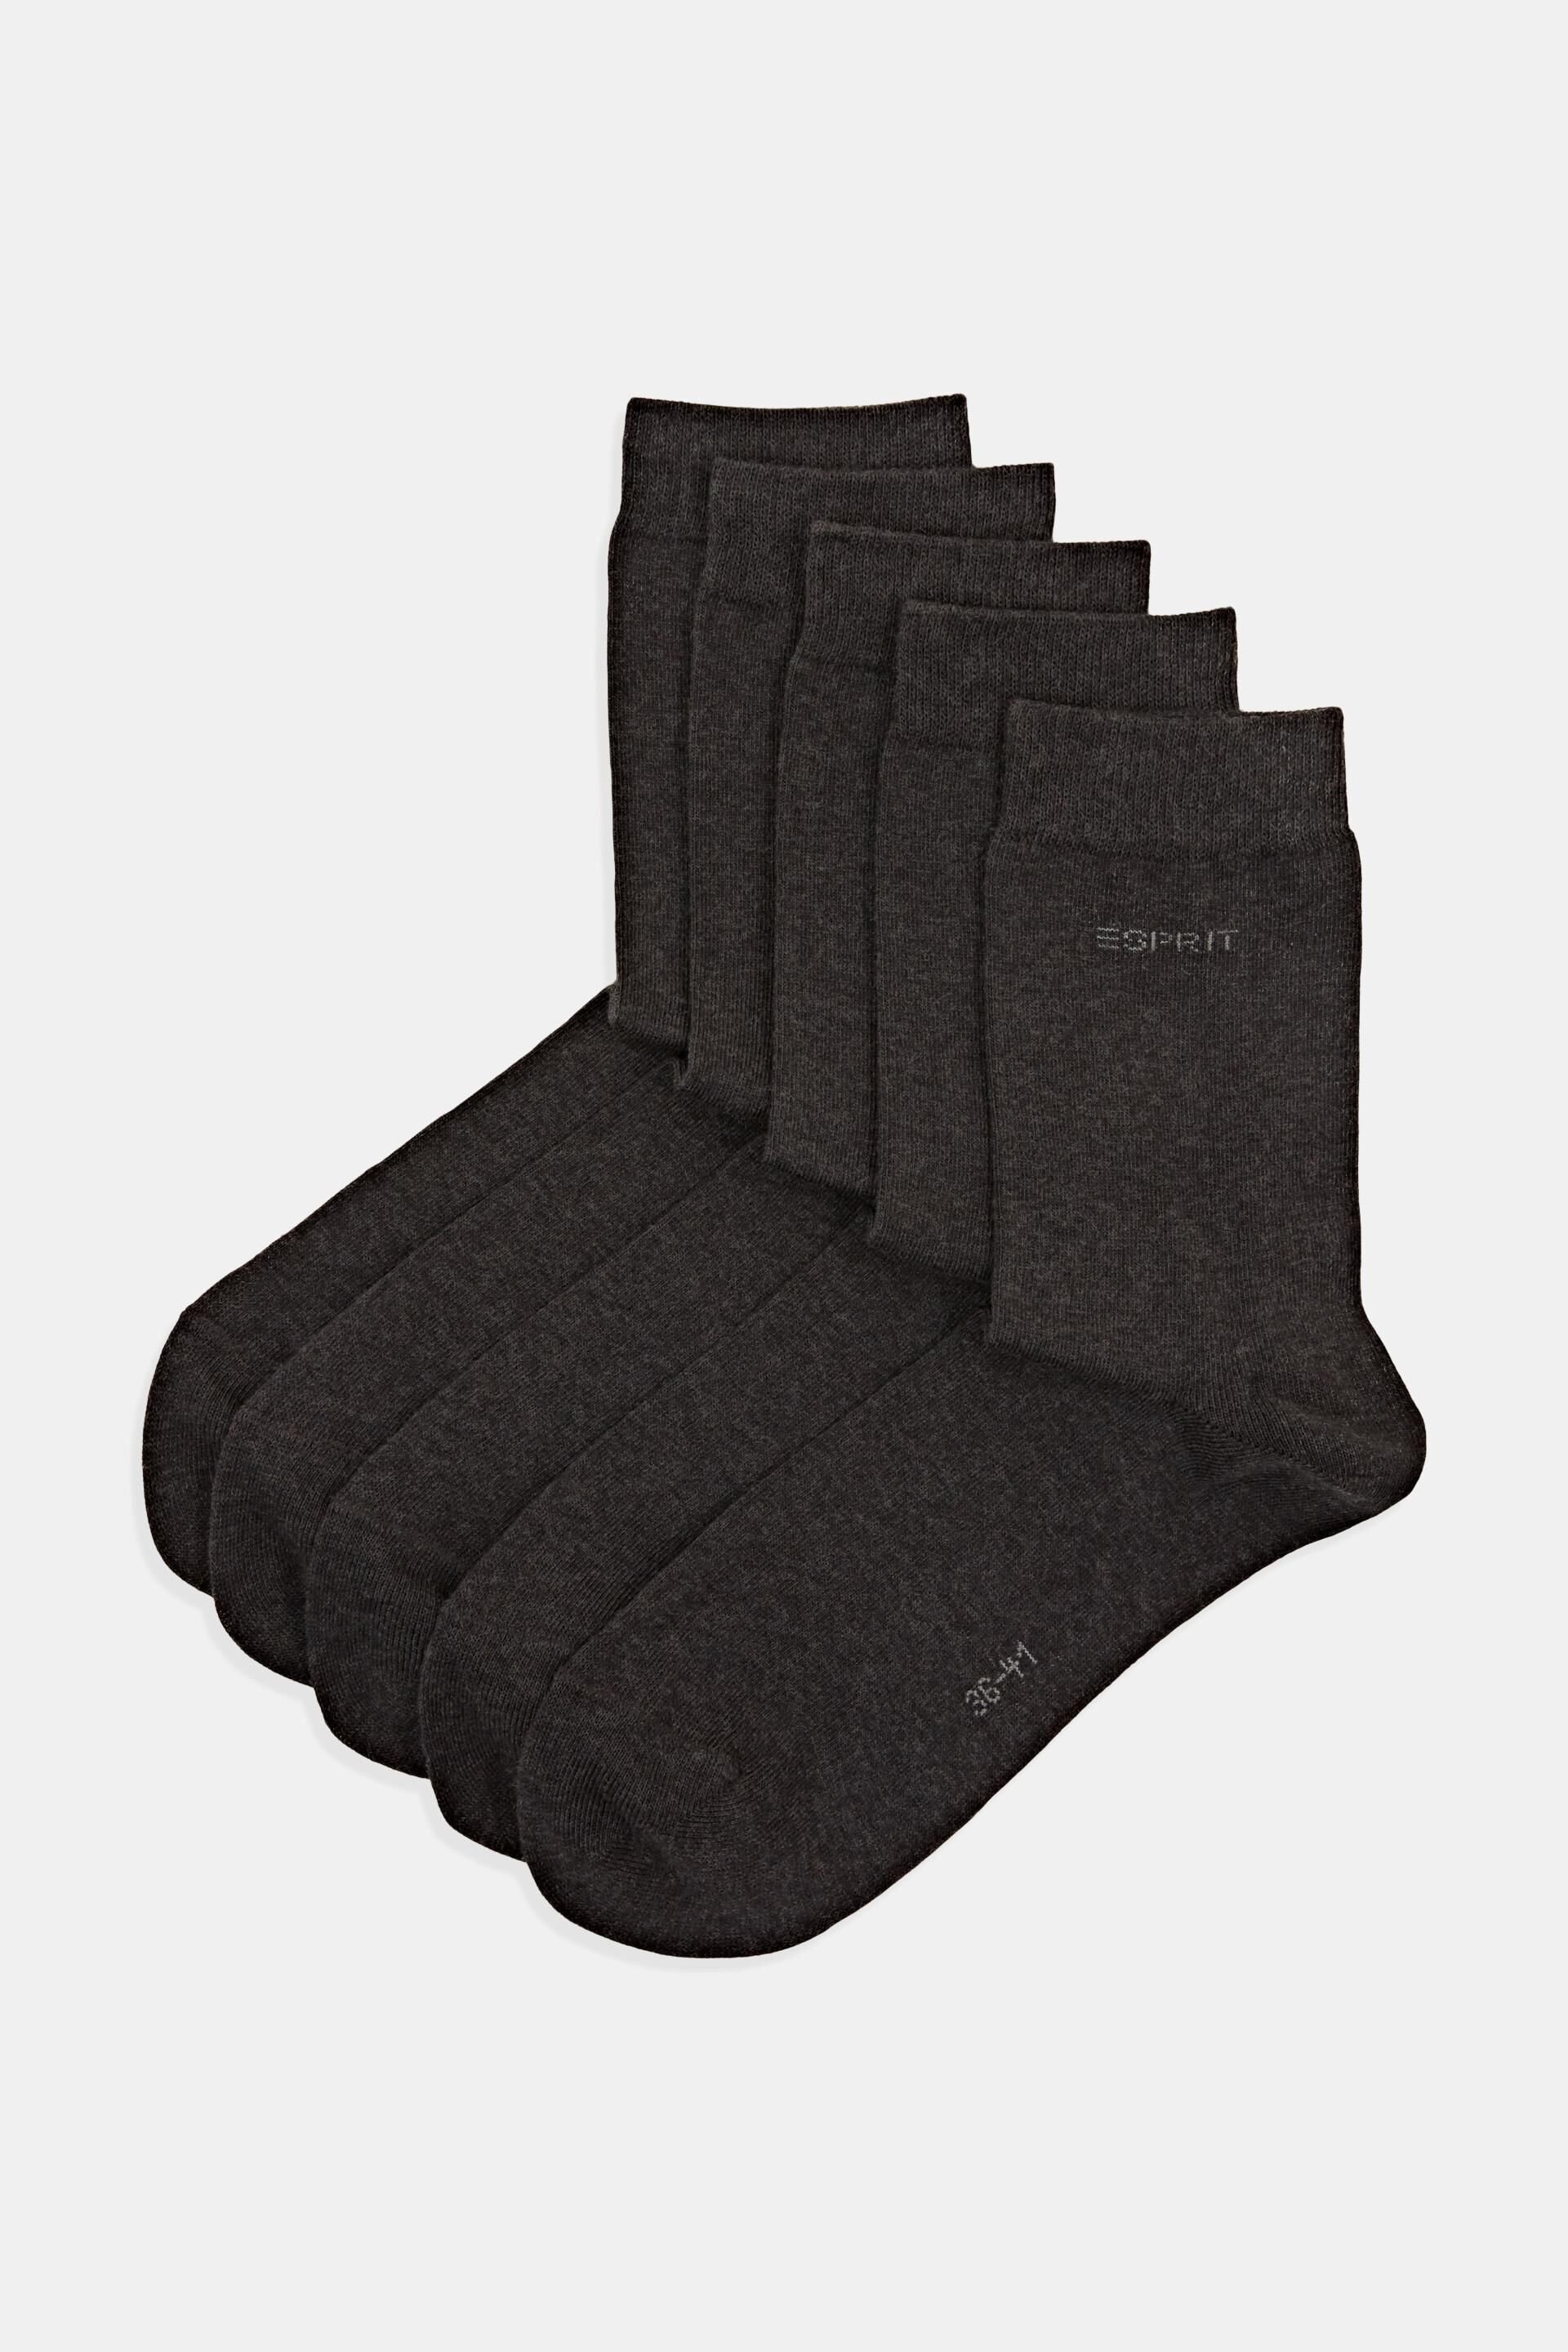 Esprit cotton socks, of organic Pack 5 plain